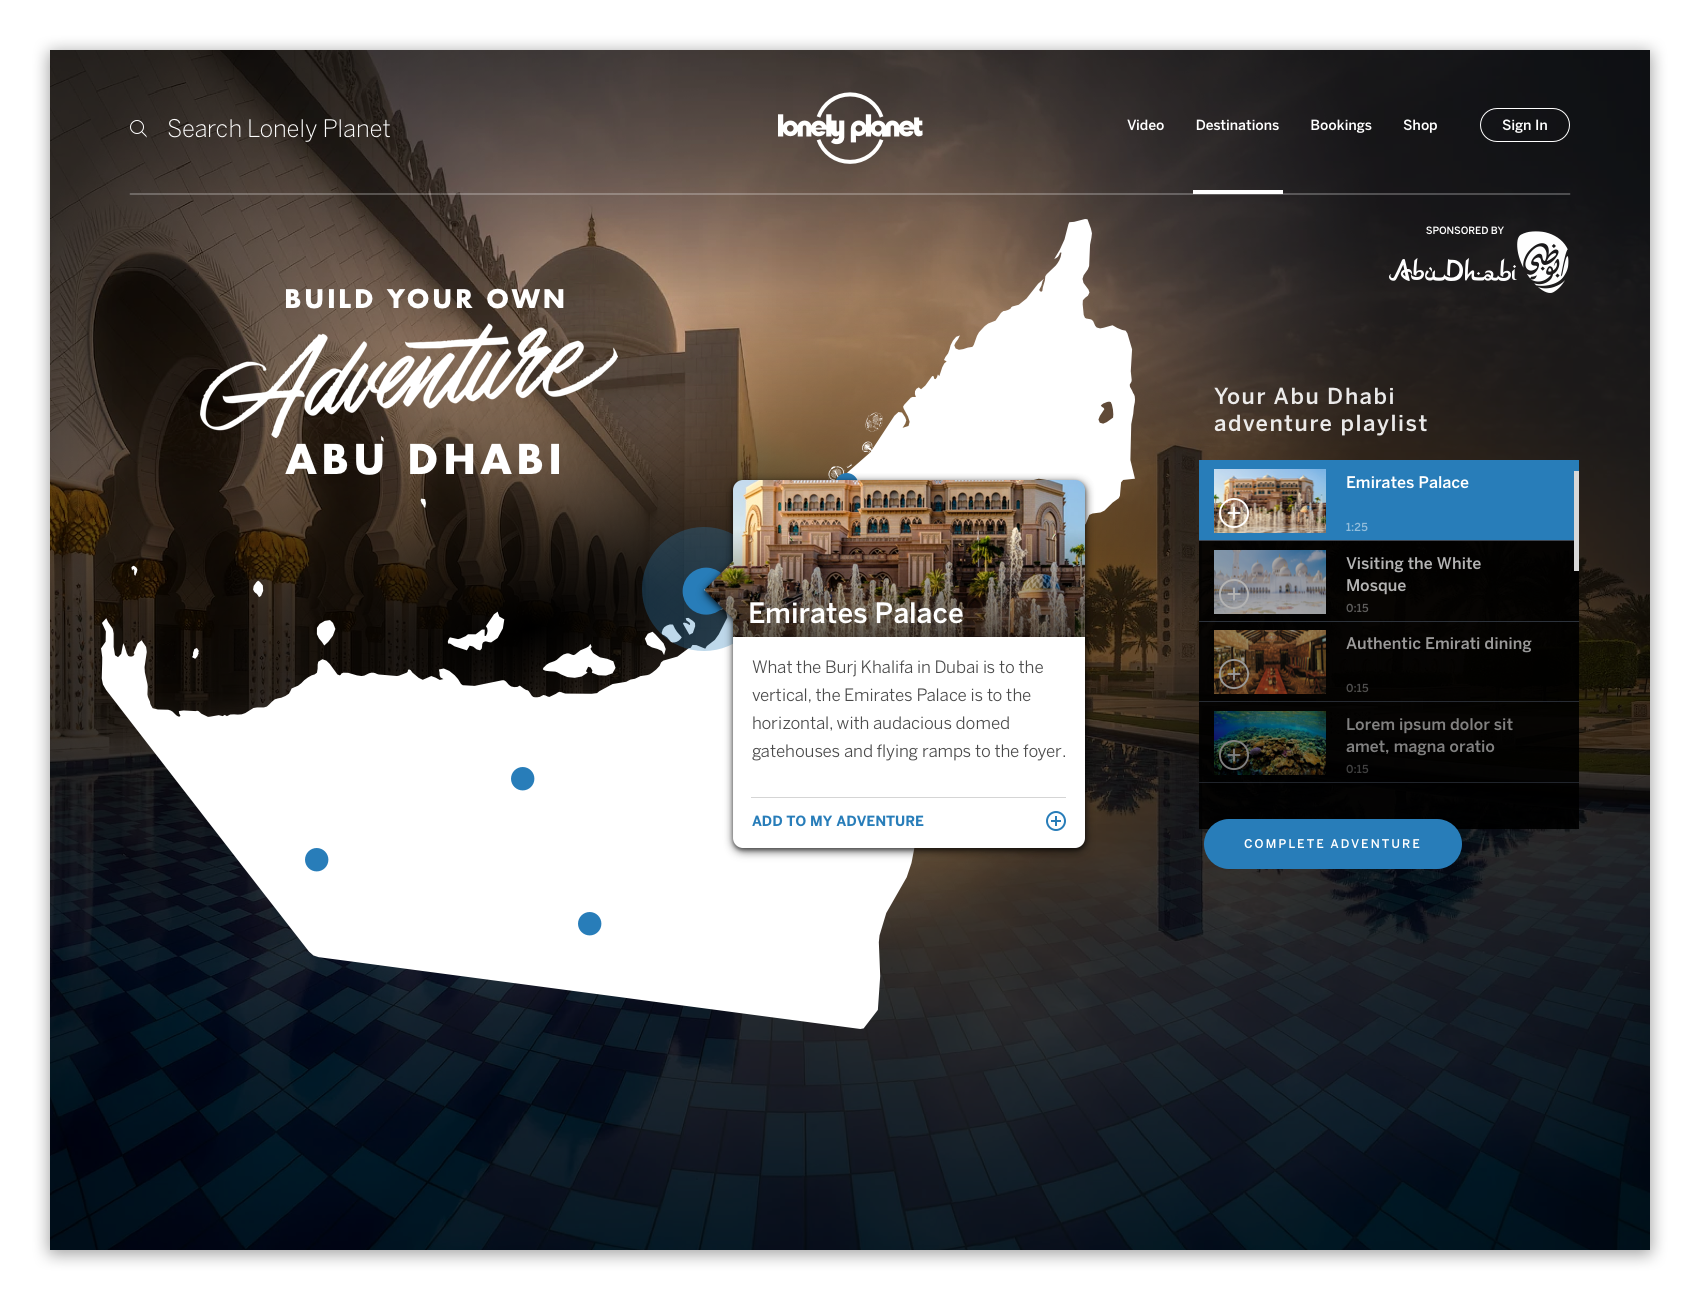 Abu-Dhabi-2018-CYOA-player-state1